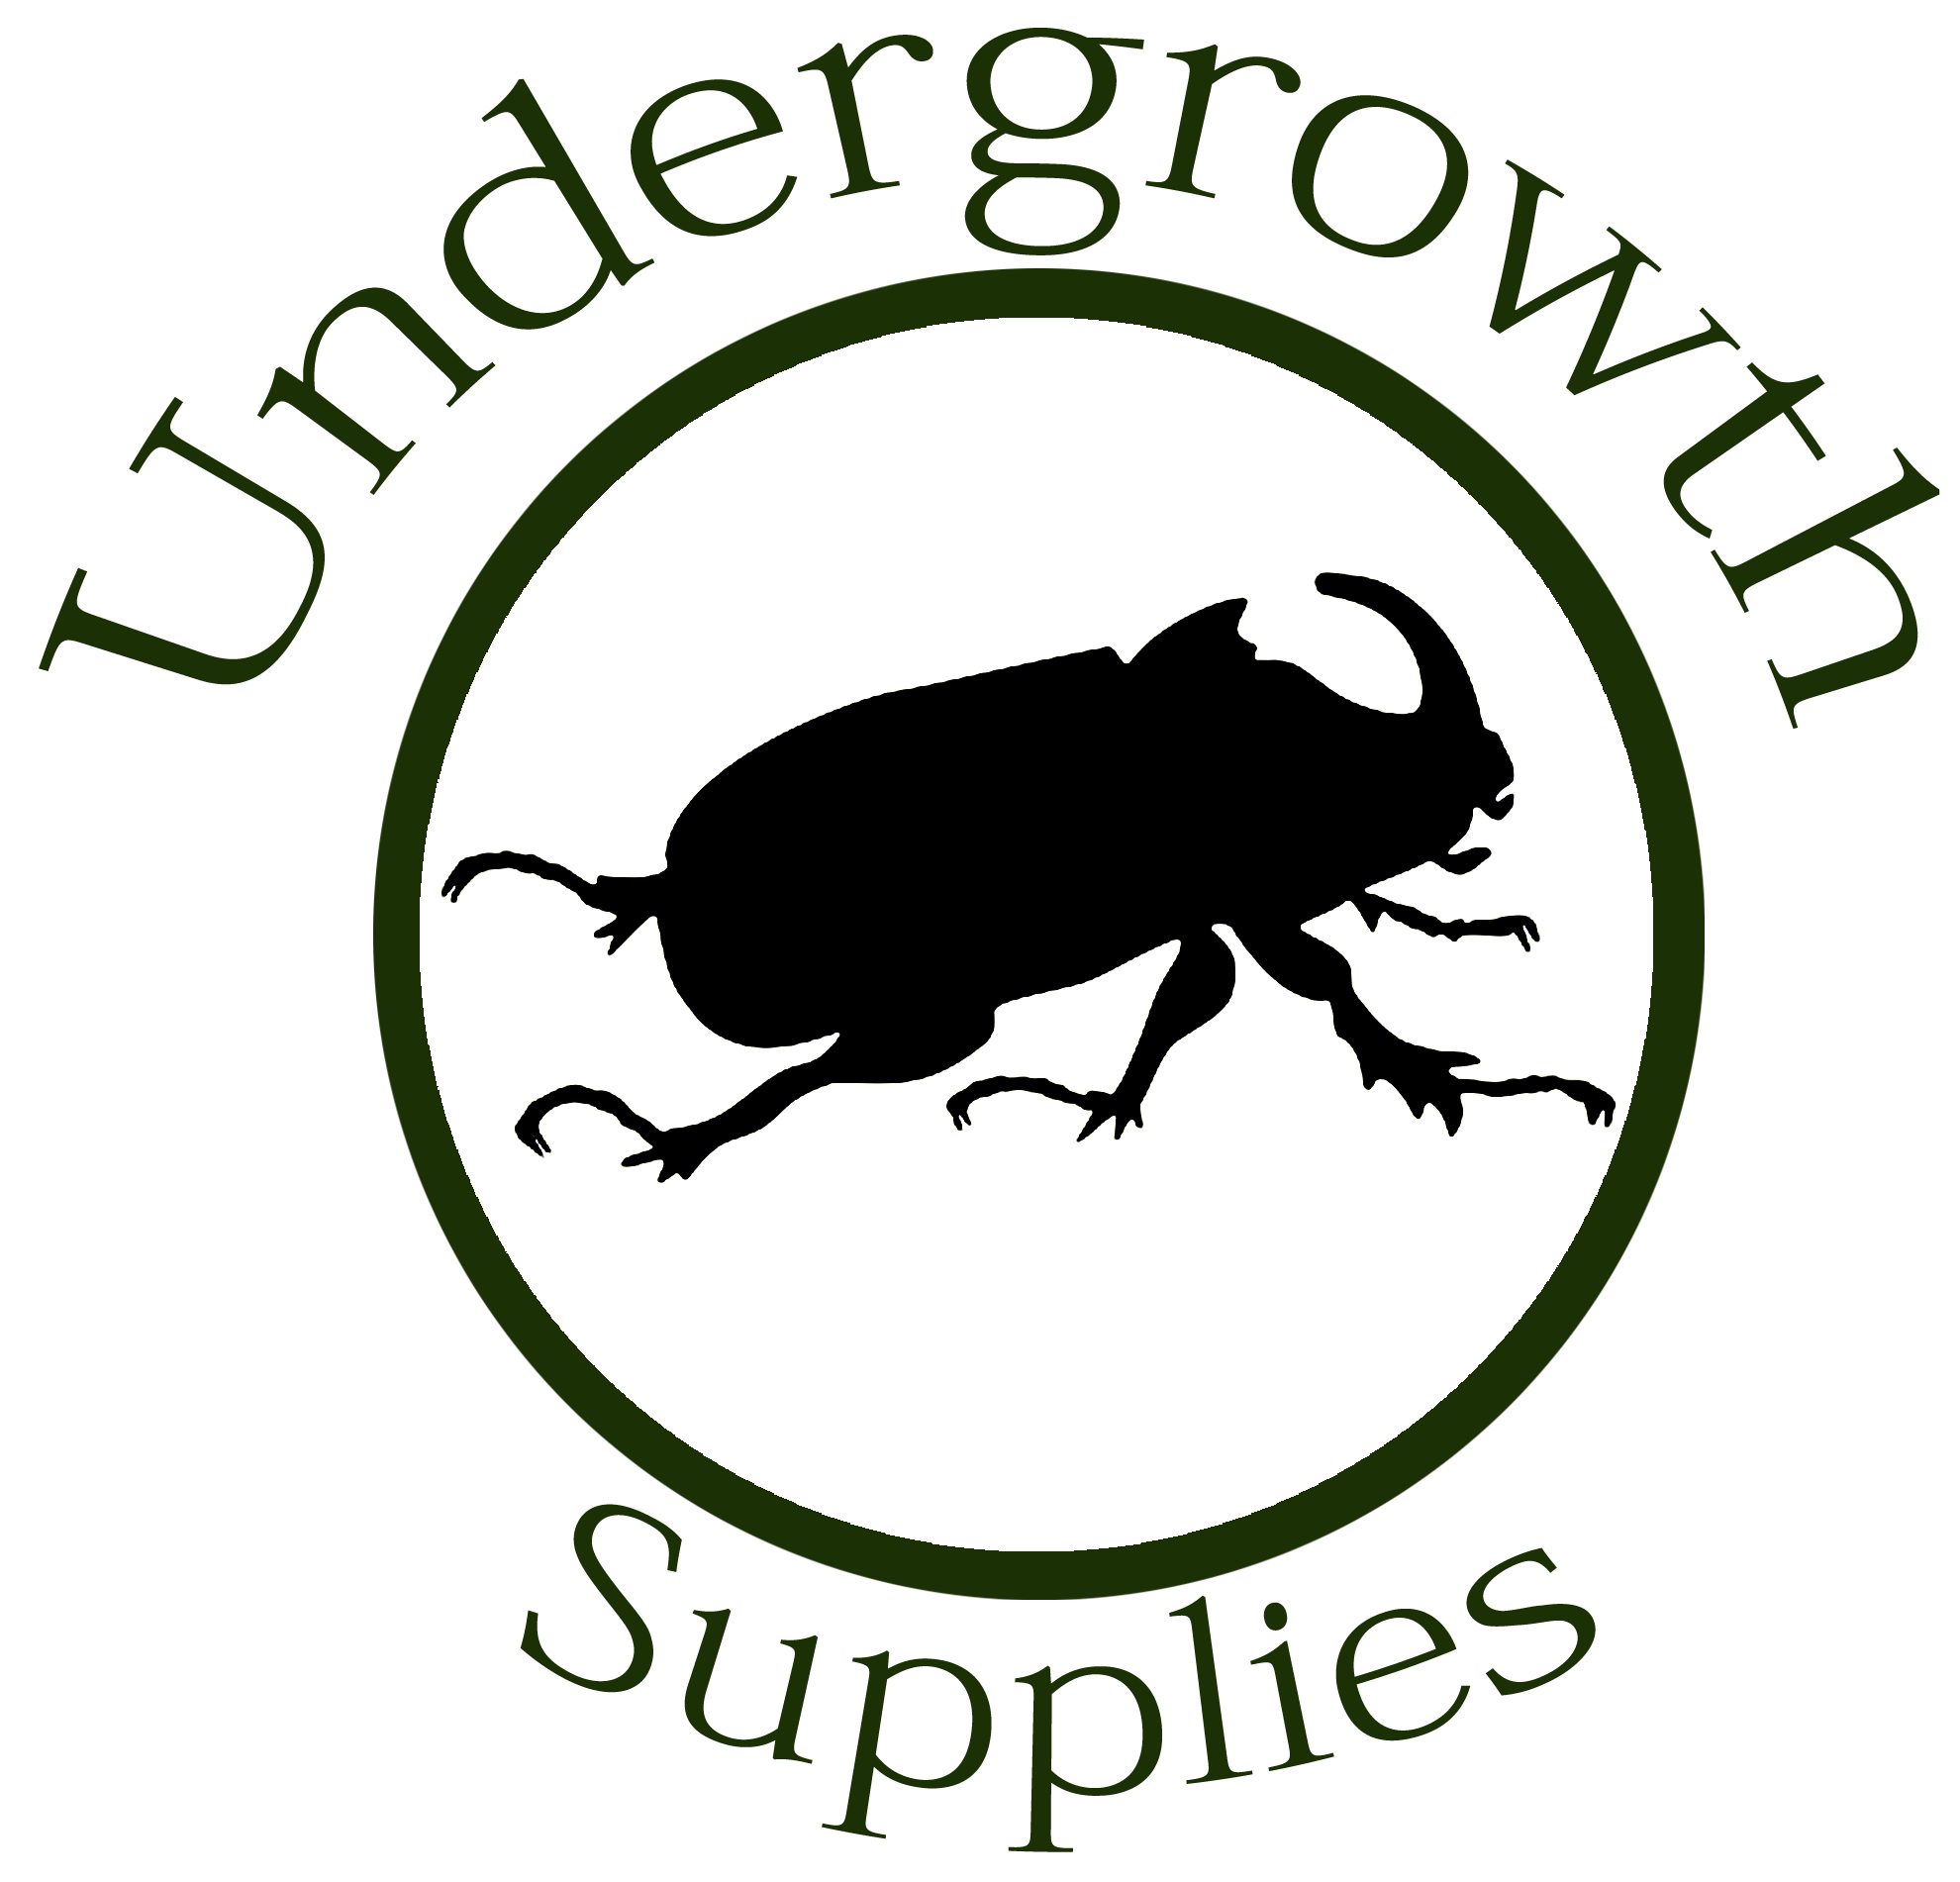 Undergrowth Amphibian and Invertebrate Supplies. Selling products for terrarium's, paludarium's and vivarium's in the U.K